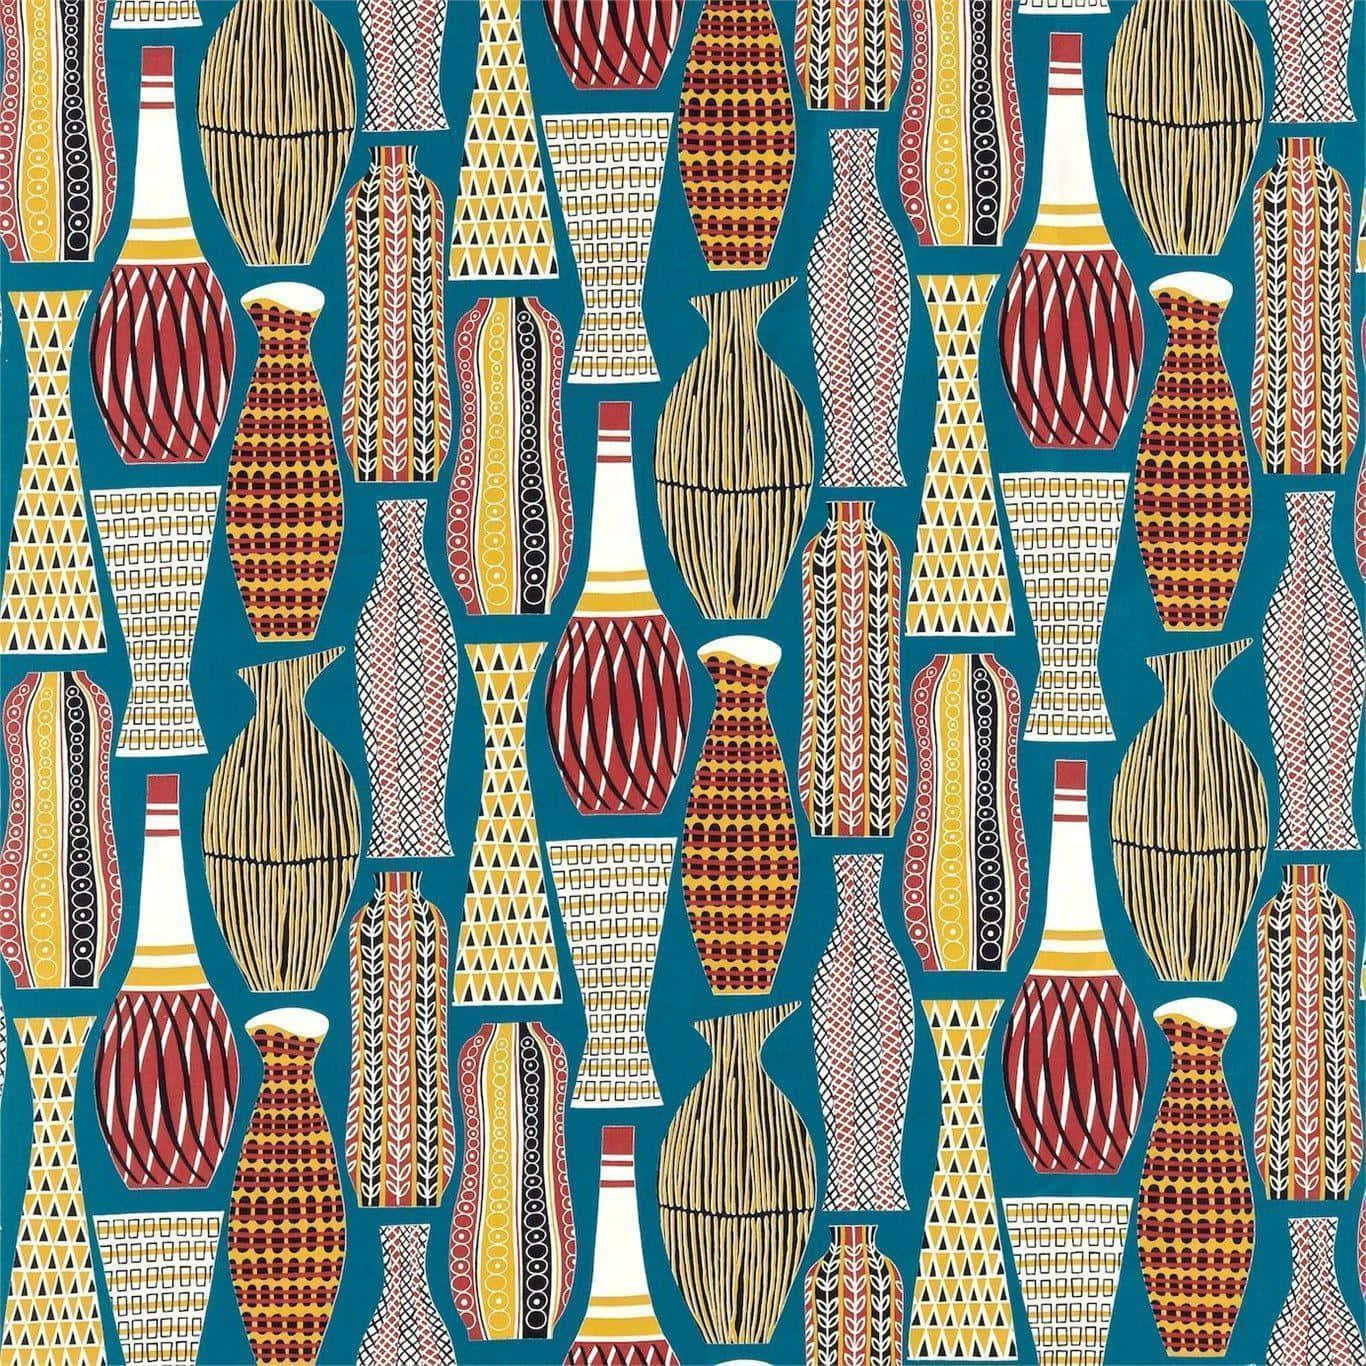 Close Up Detail of Colorful Textile Art Wallpaper